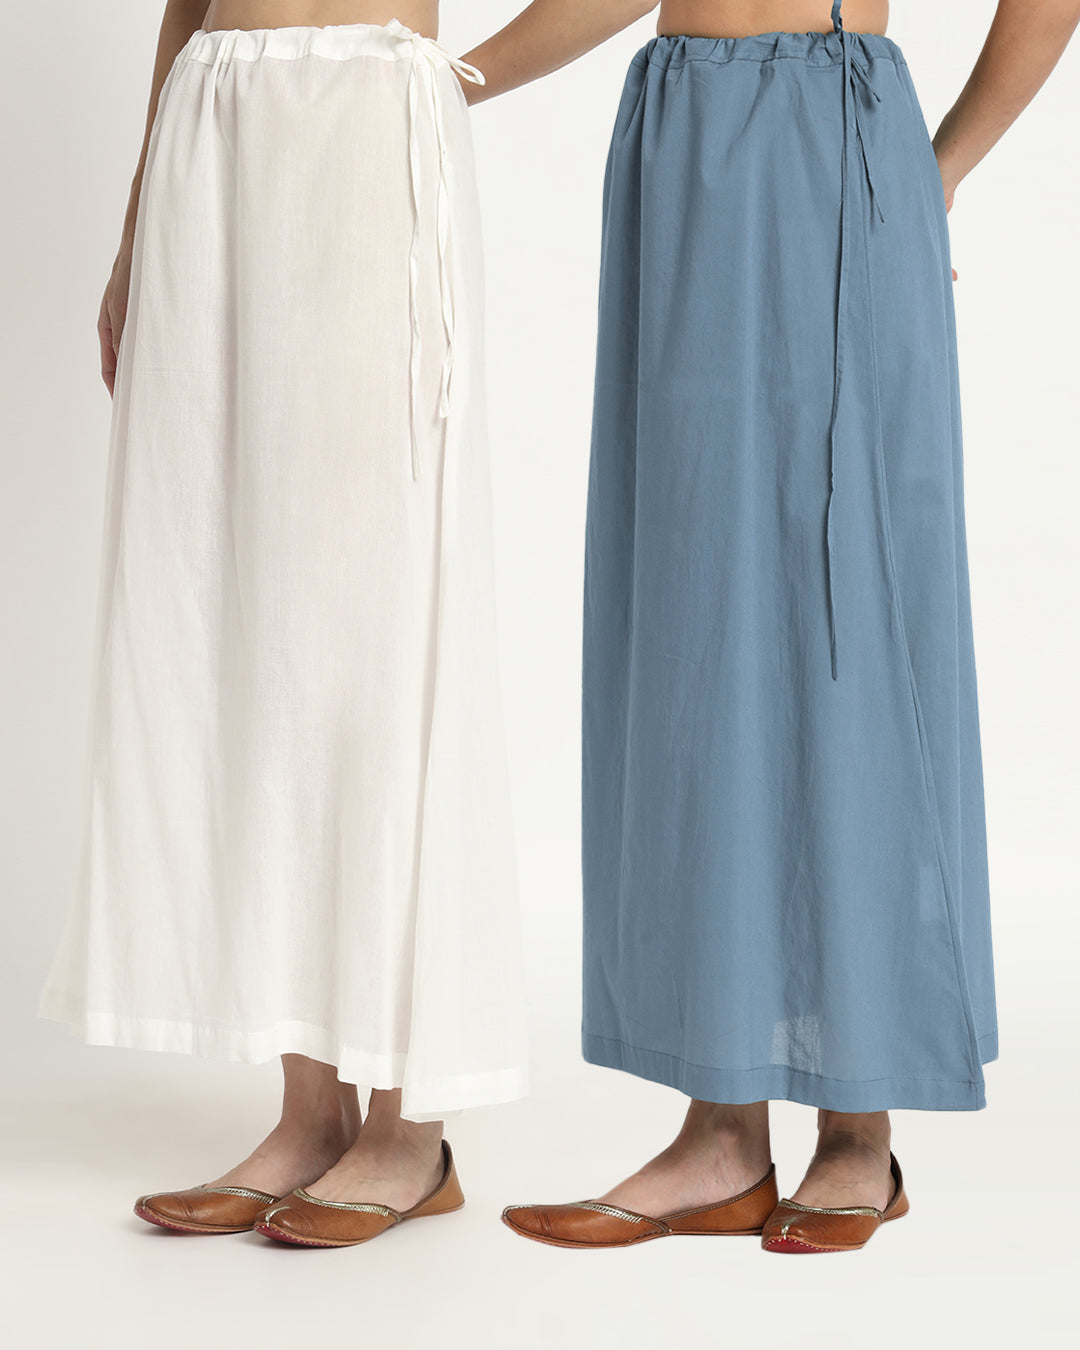 Combo: Pristine White & Blue Dawn Peekaboo Petticoat- Set of 2